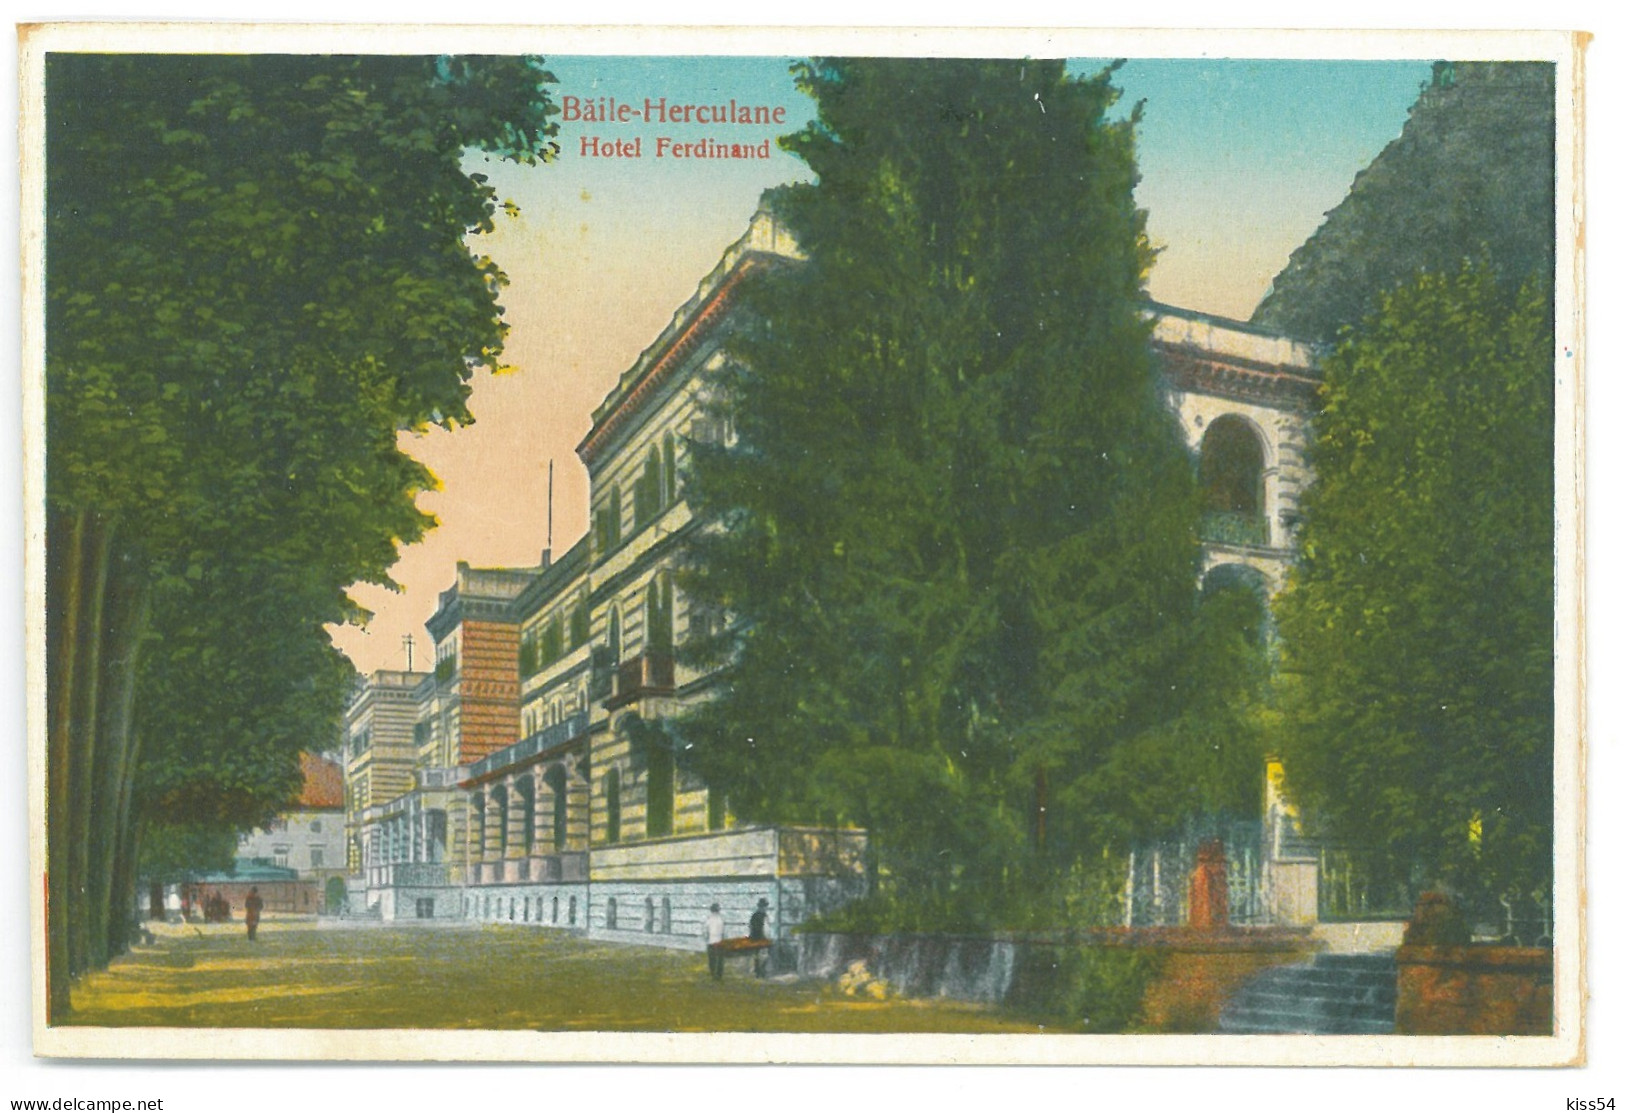 RO 38 - 25080 Baile HERCULANE, Caras-Severin, Ferdinand Hotel, Romania - Old Postcard - Unused - Roemenië